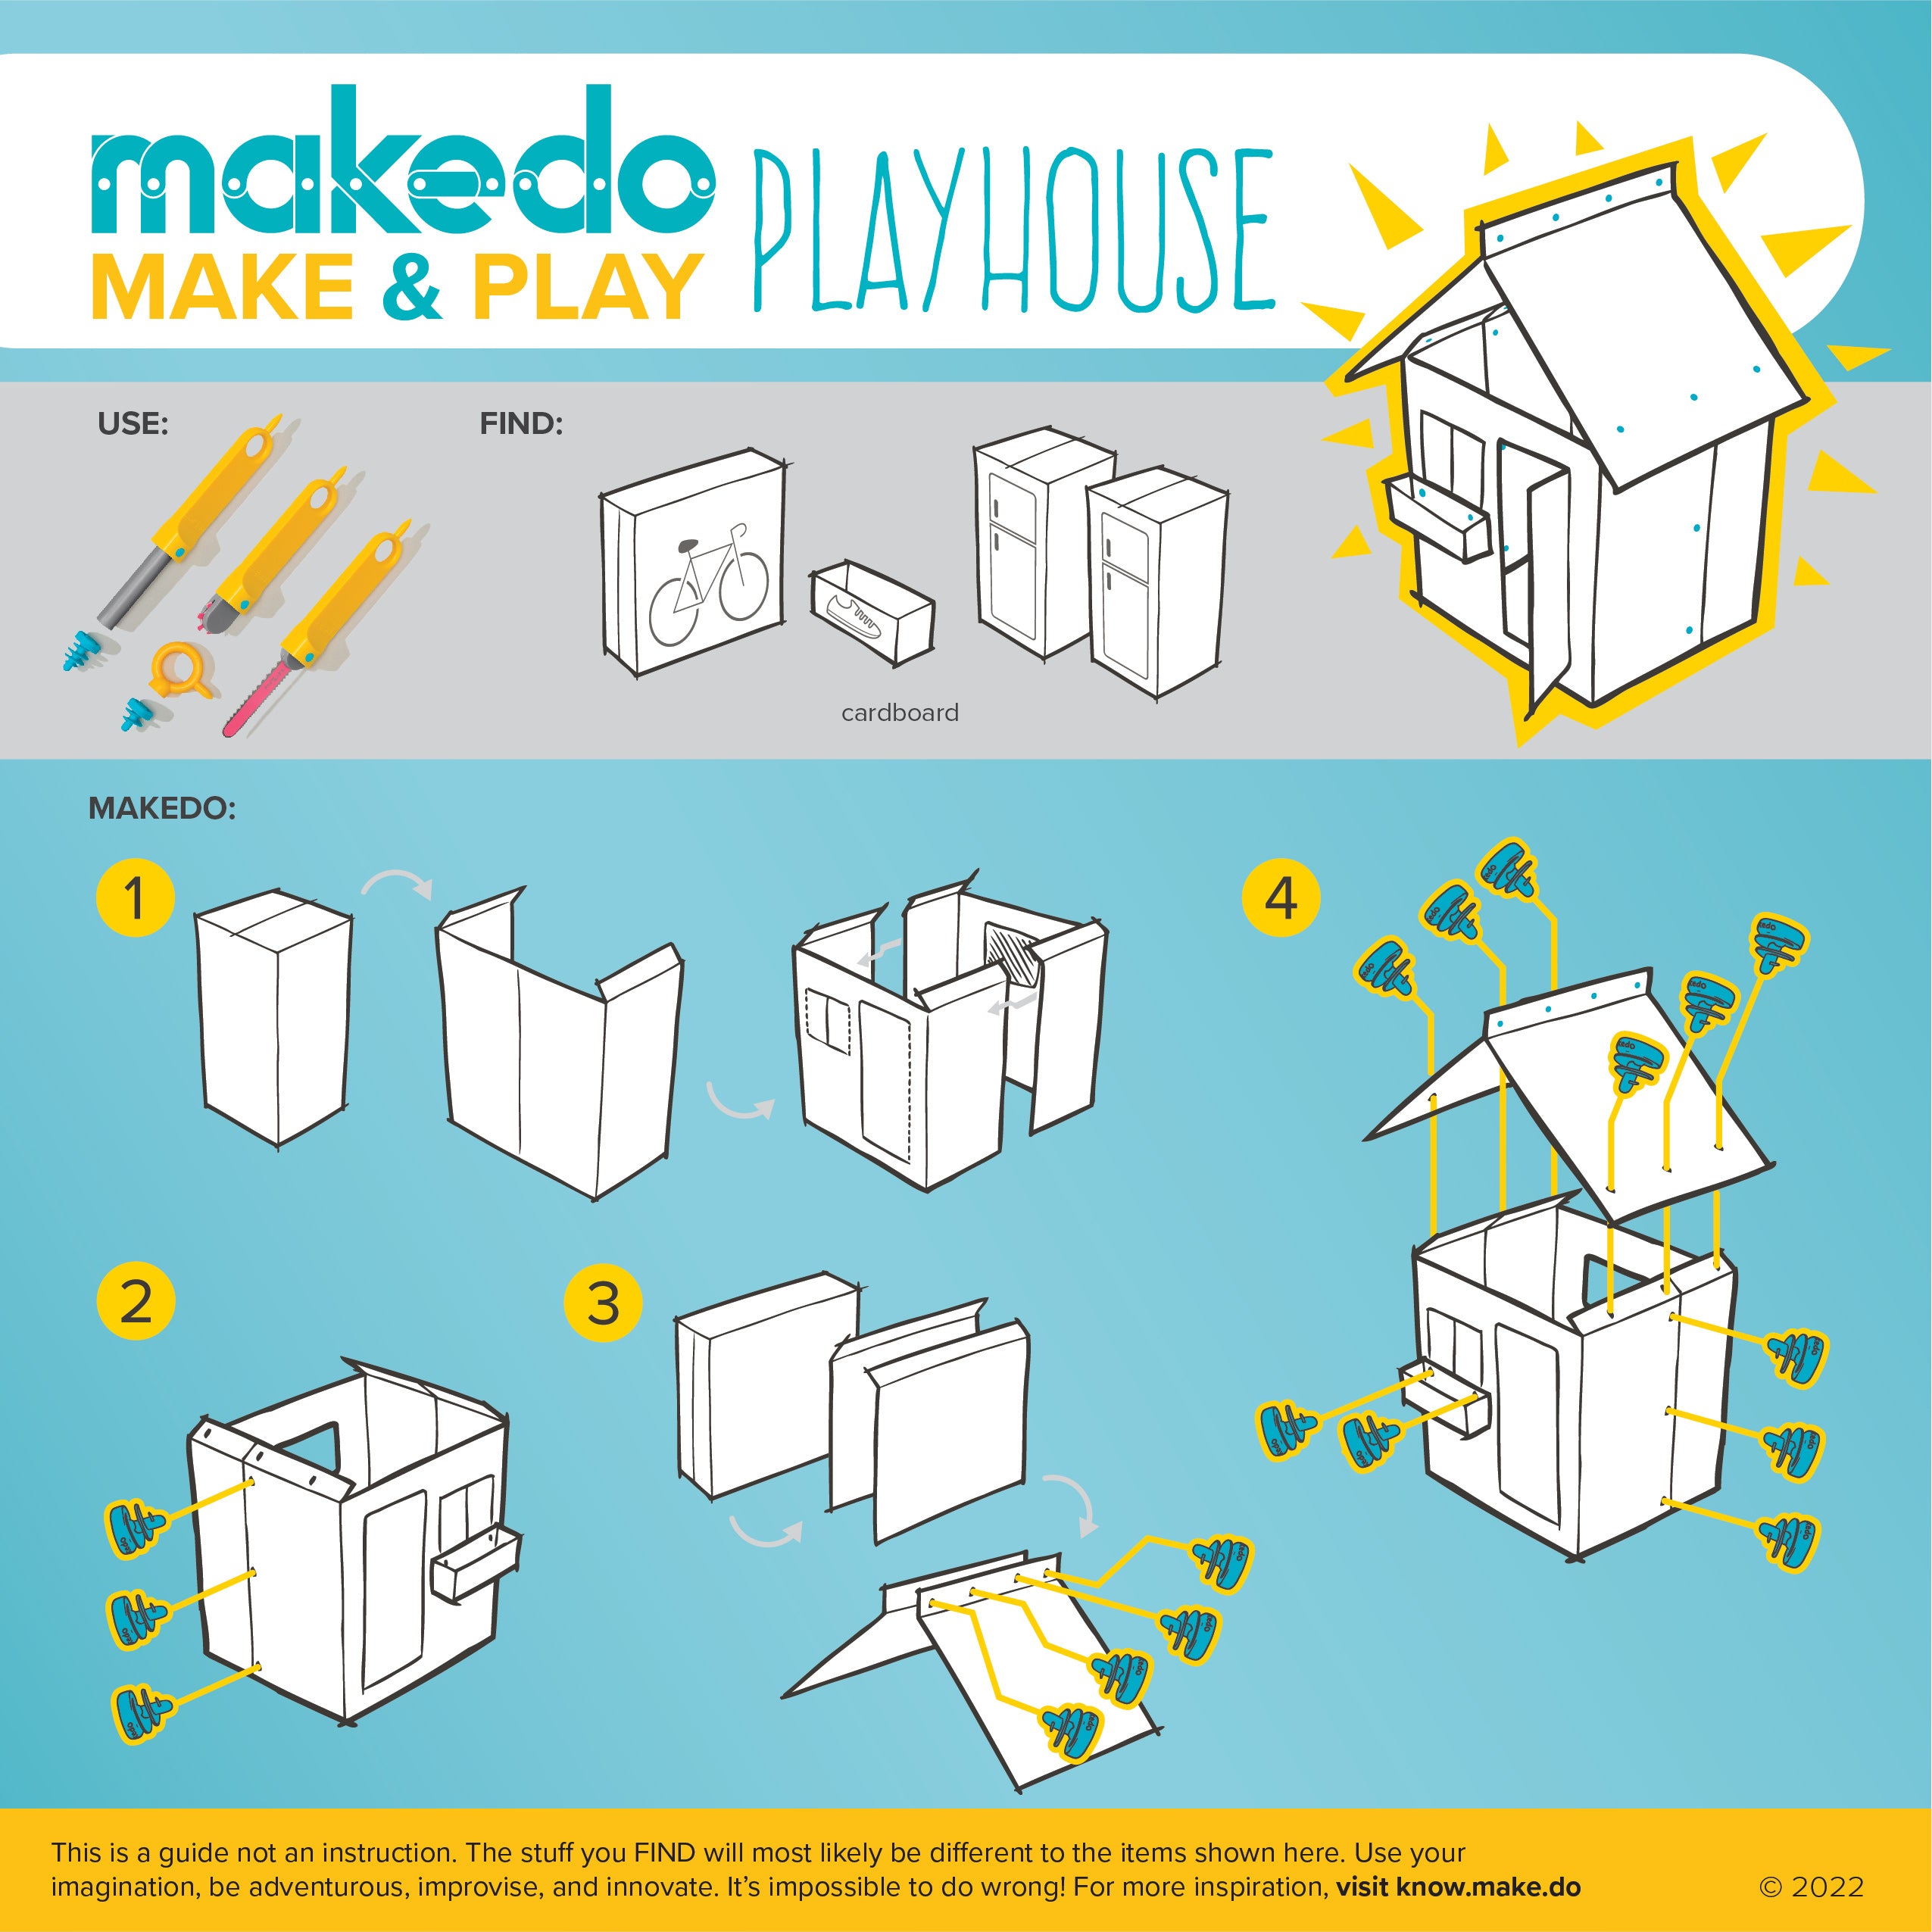 Makedo guided creation - Make & Play - Playhouse